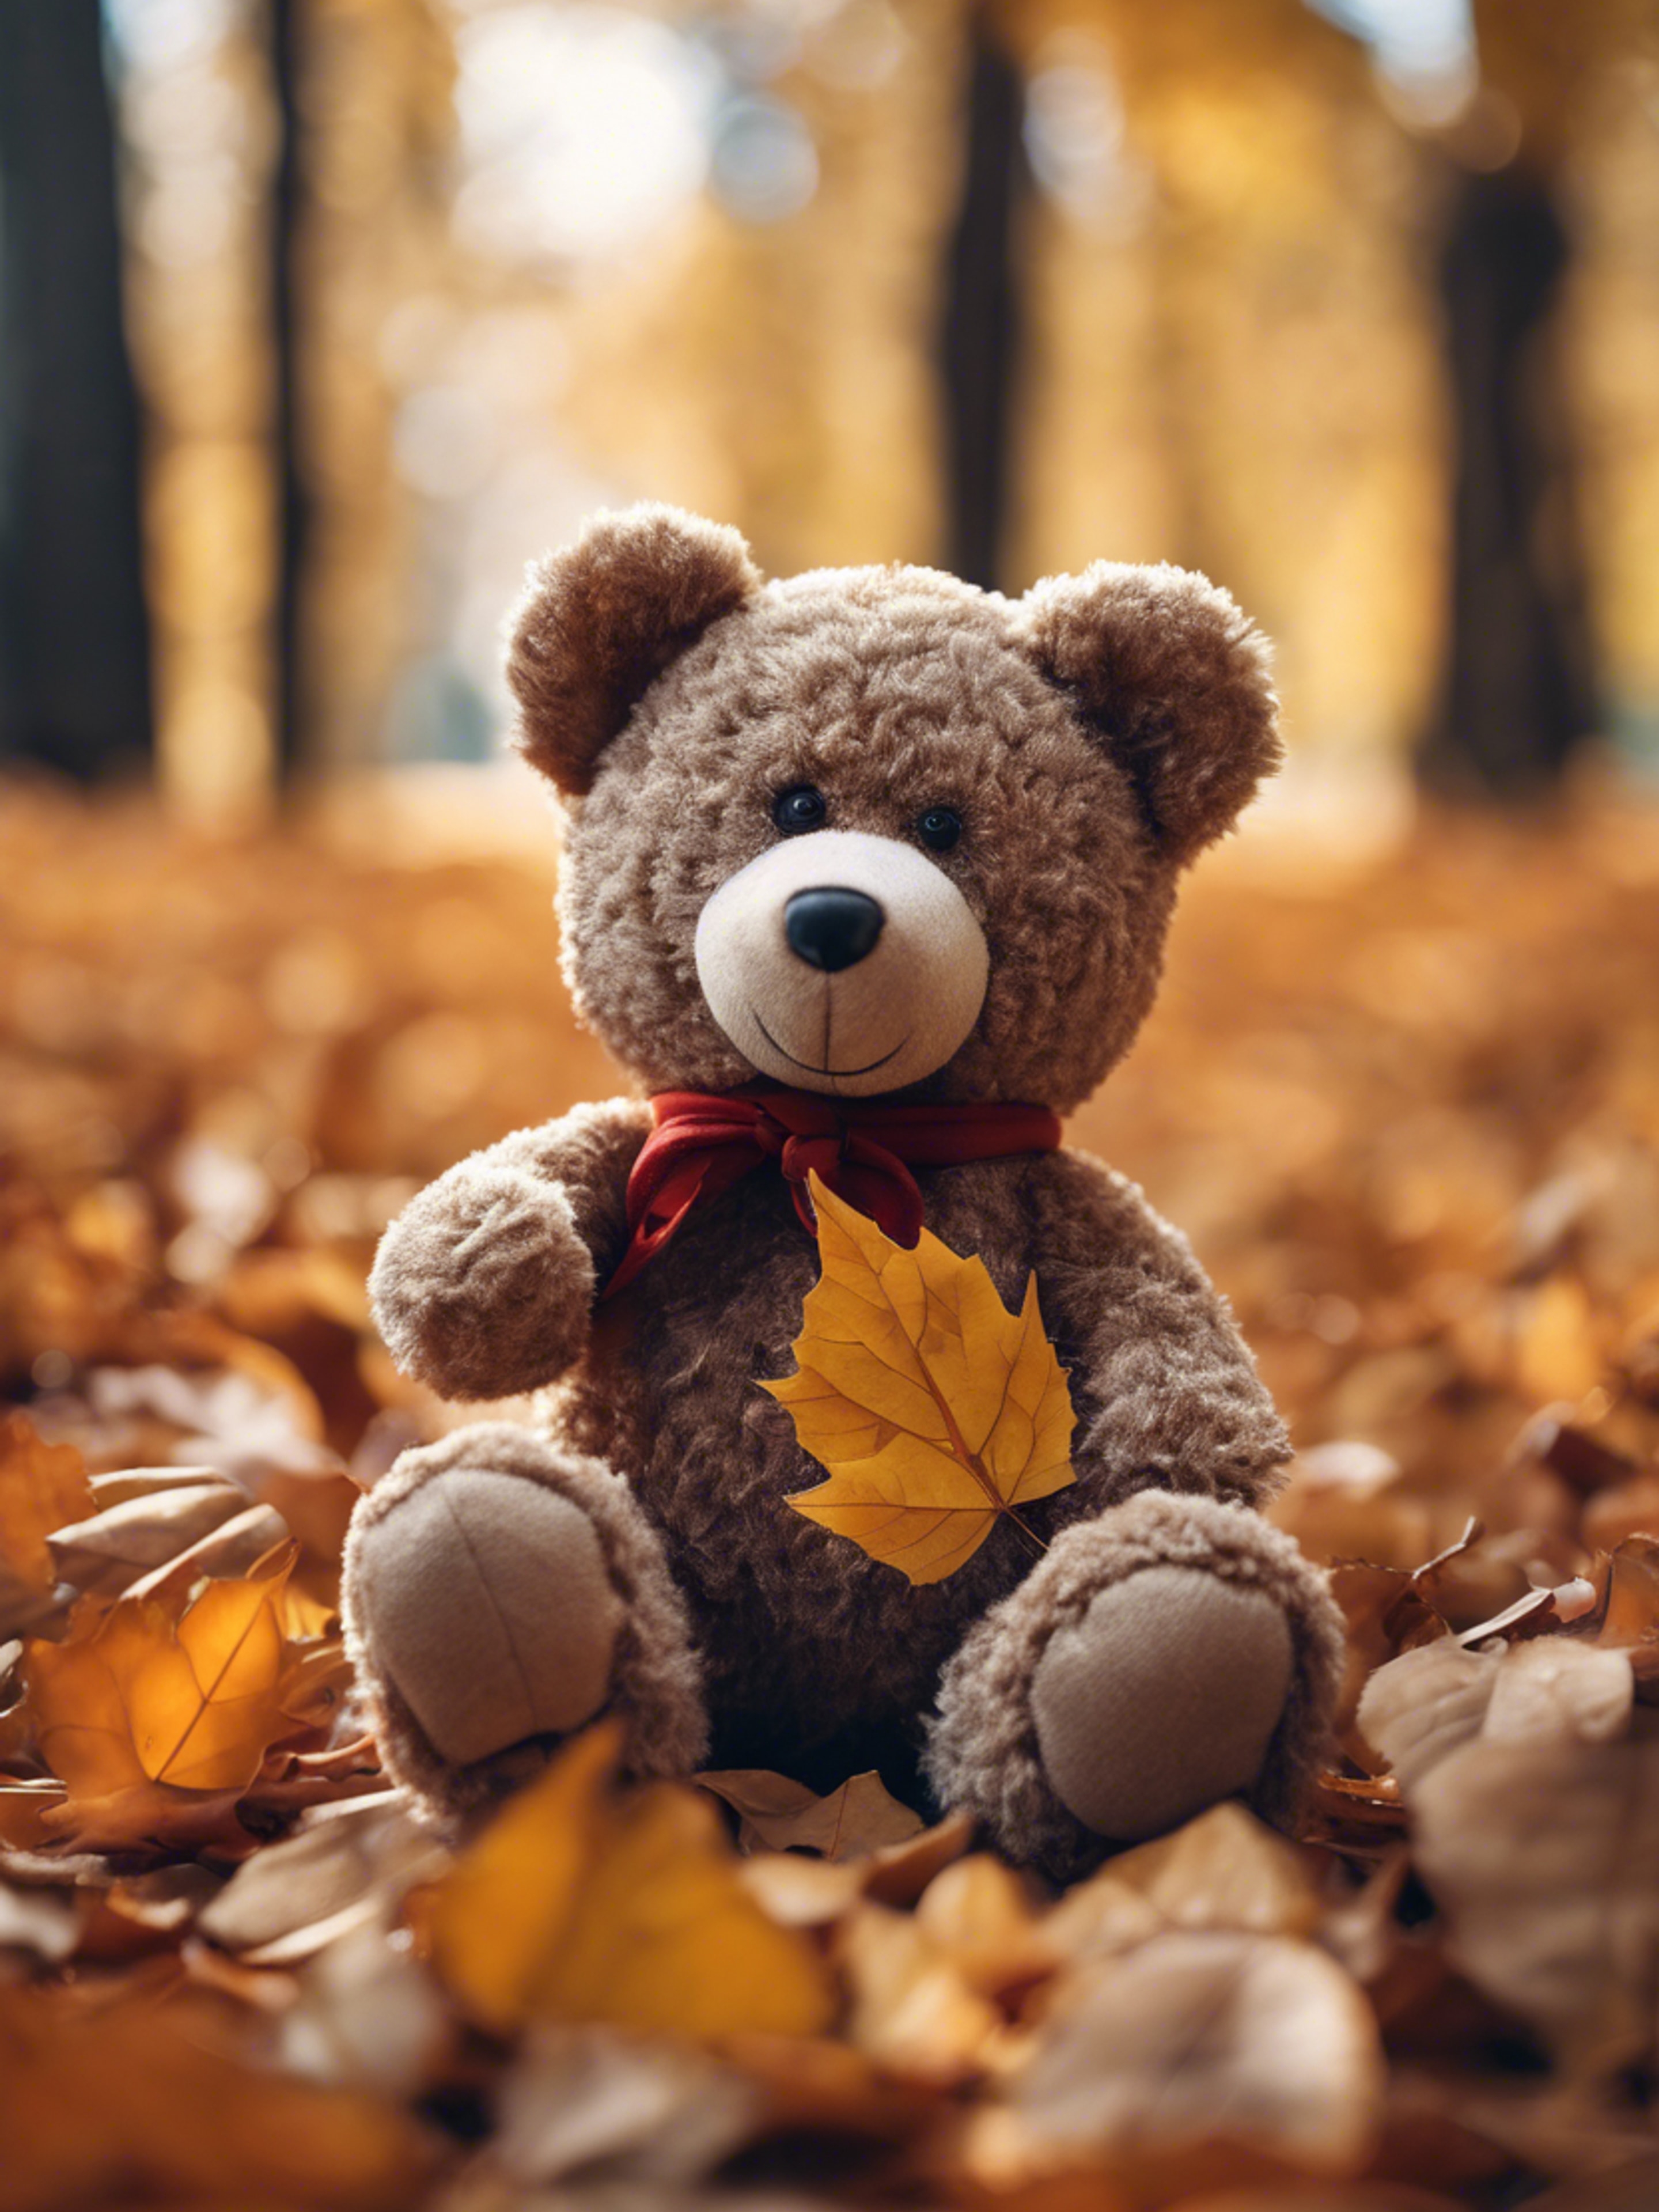 A teddy bear sitting amongst autumn leaves.壁紙[aeef19aead4e42678818]